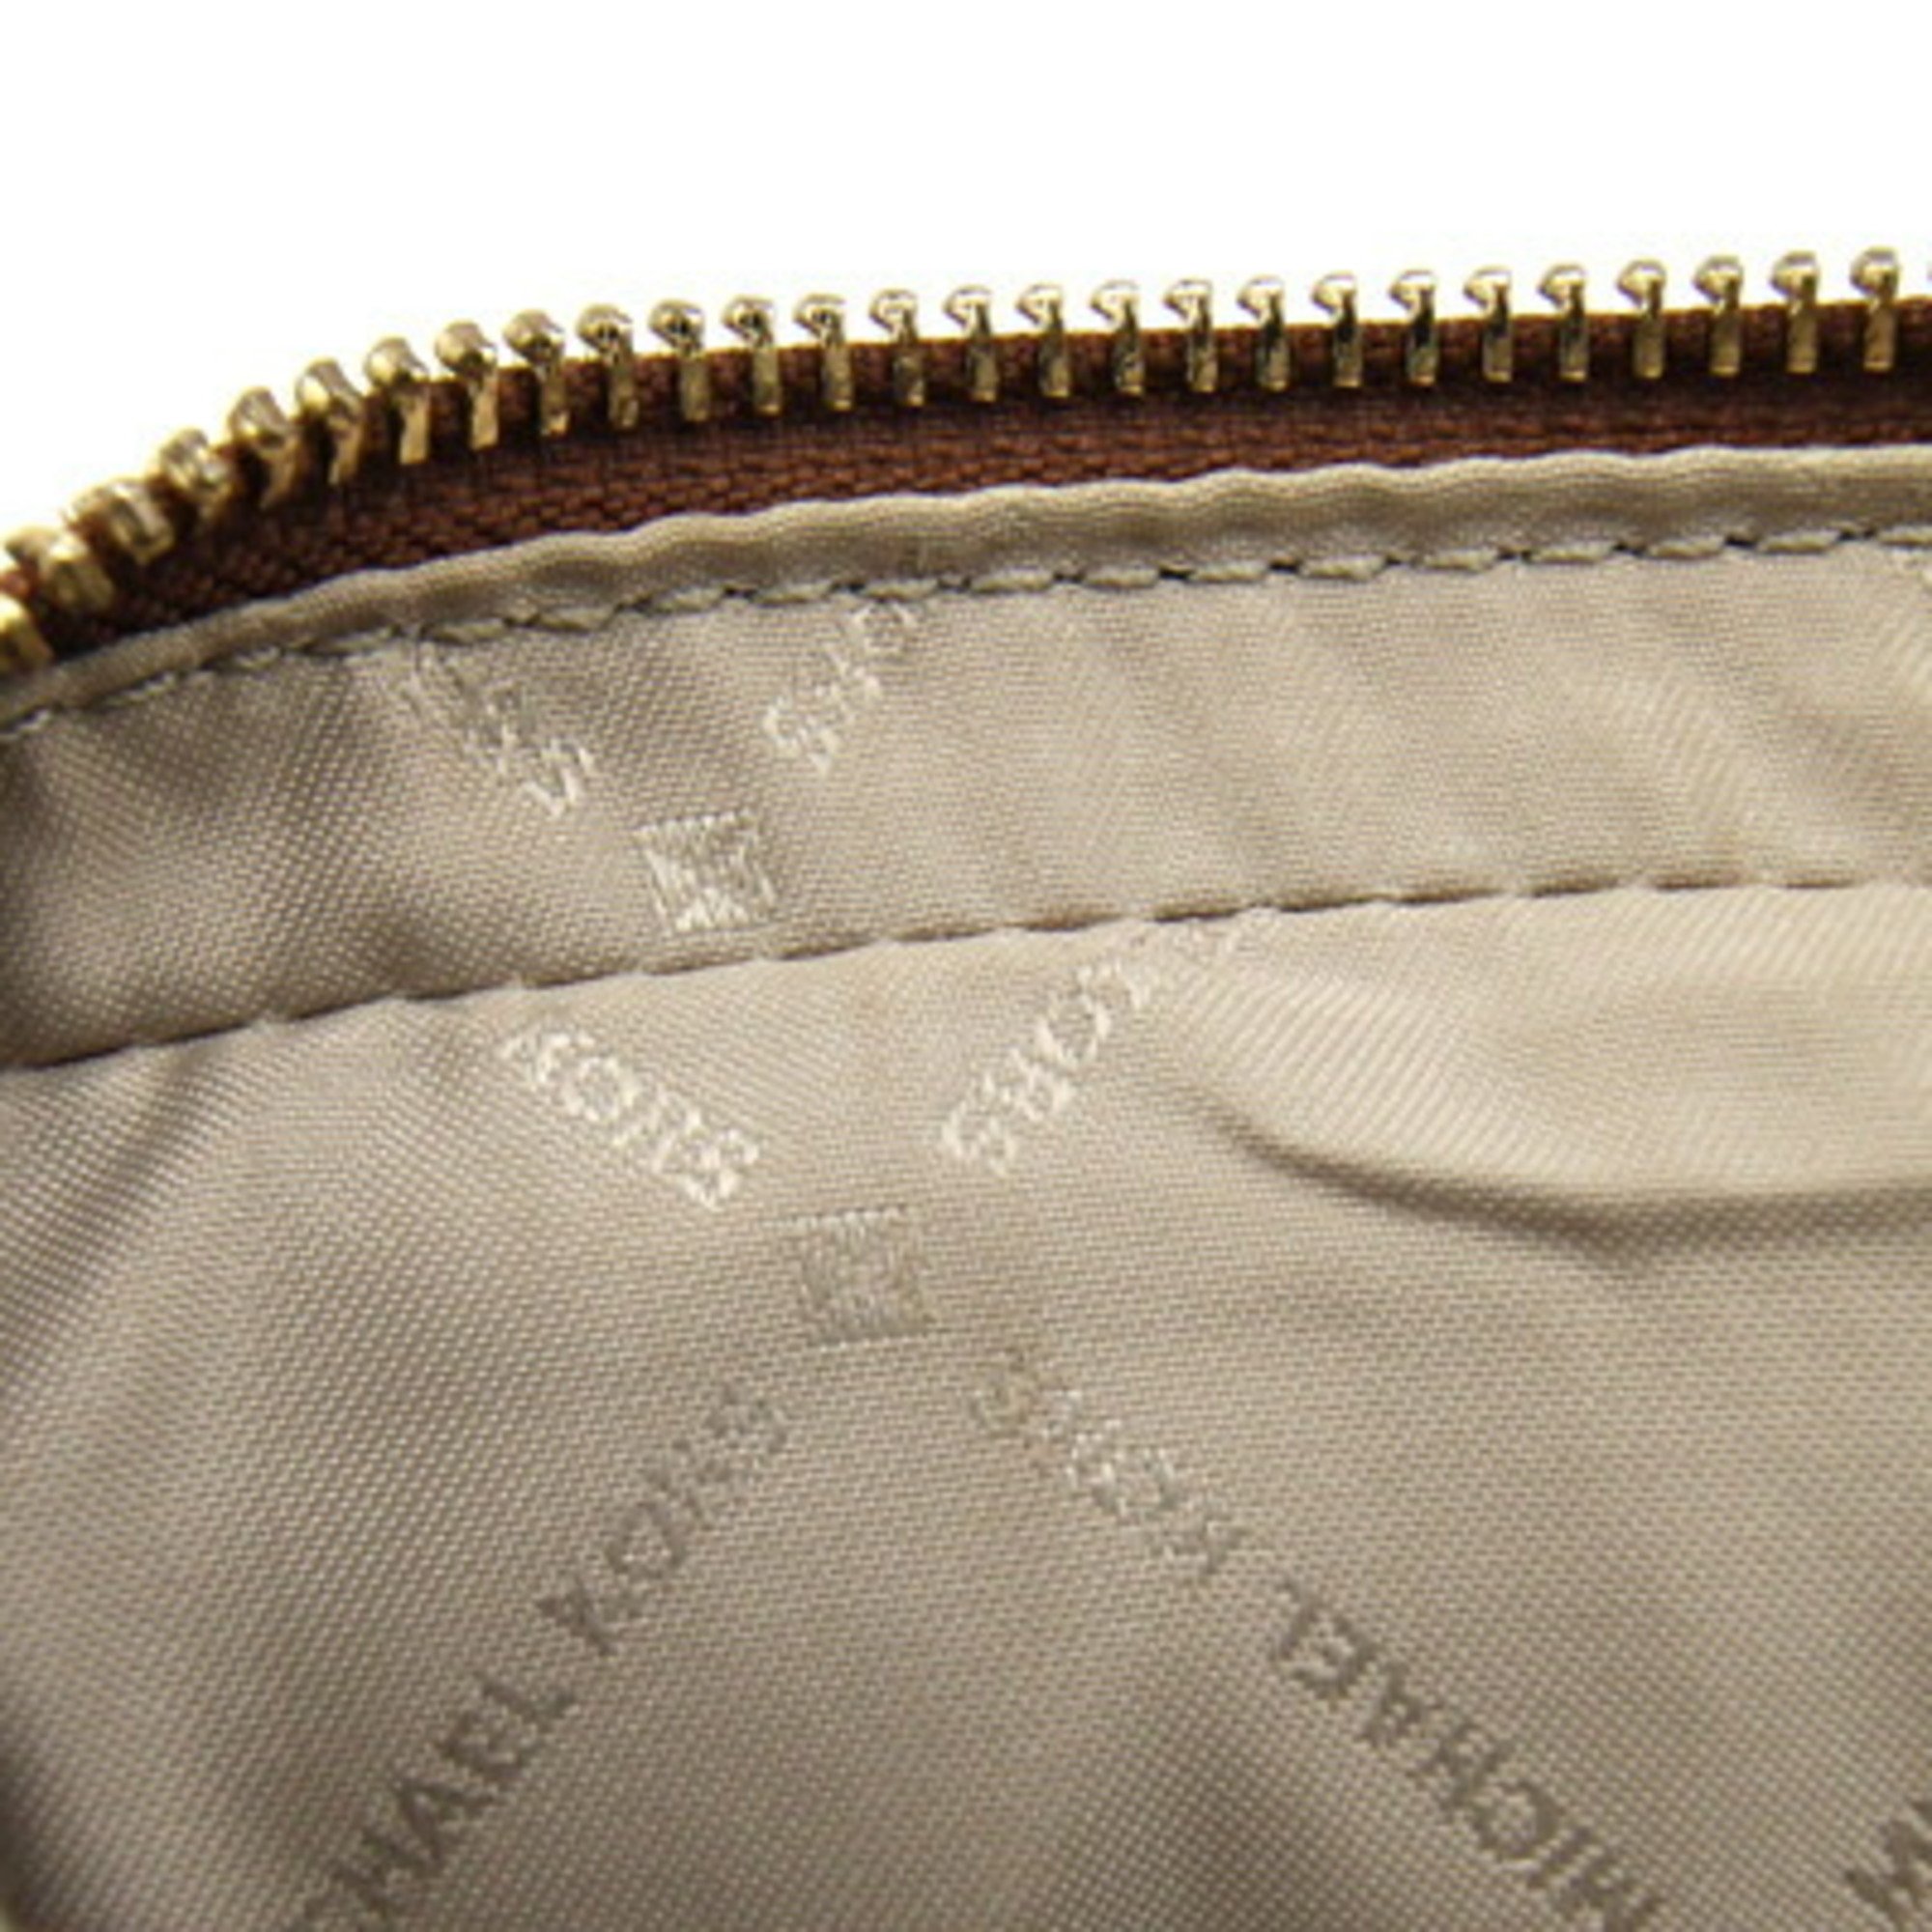 Michael Kors Shoulder Bag Jet Set 35F8GTTC3B Dark Brown PVC Leather Crossbody Chain Women's MICHAEL KORS